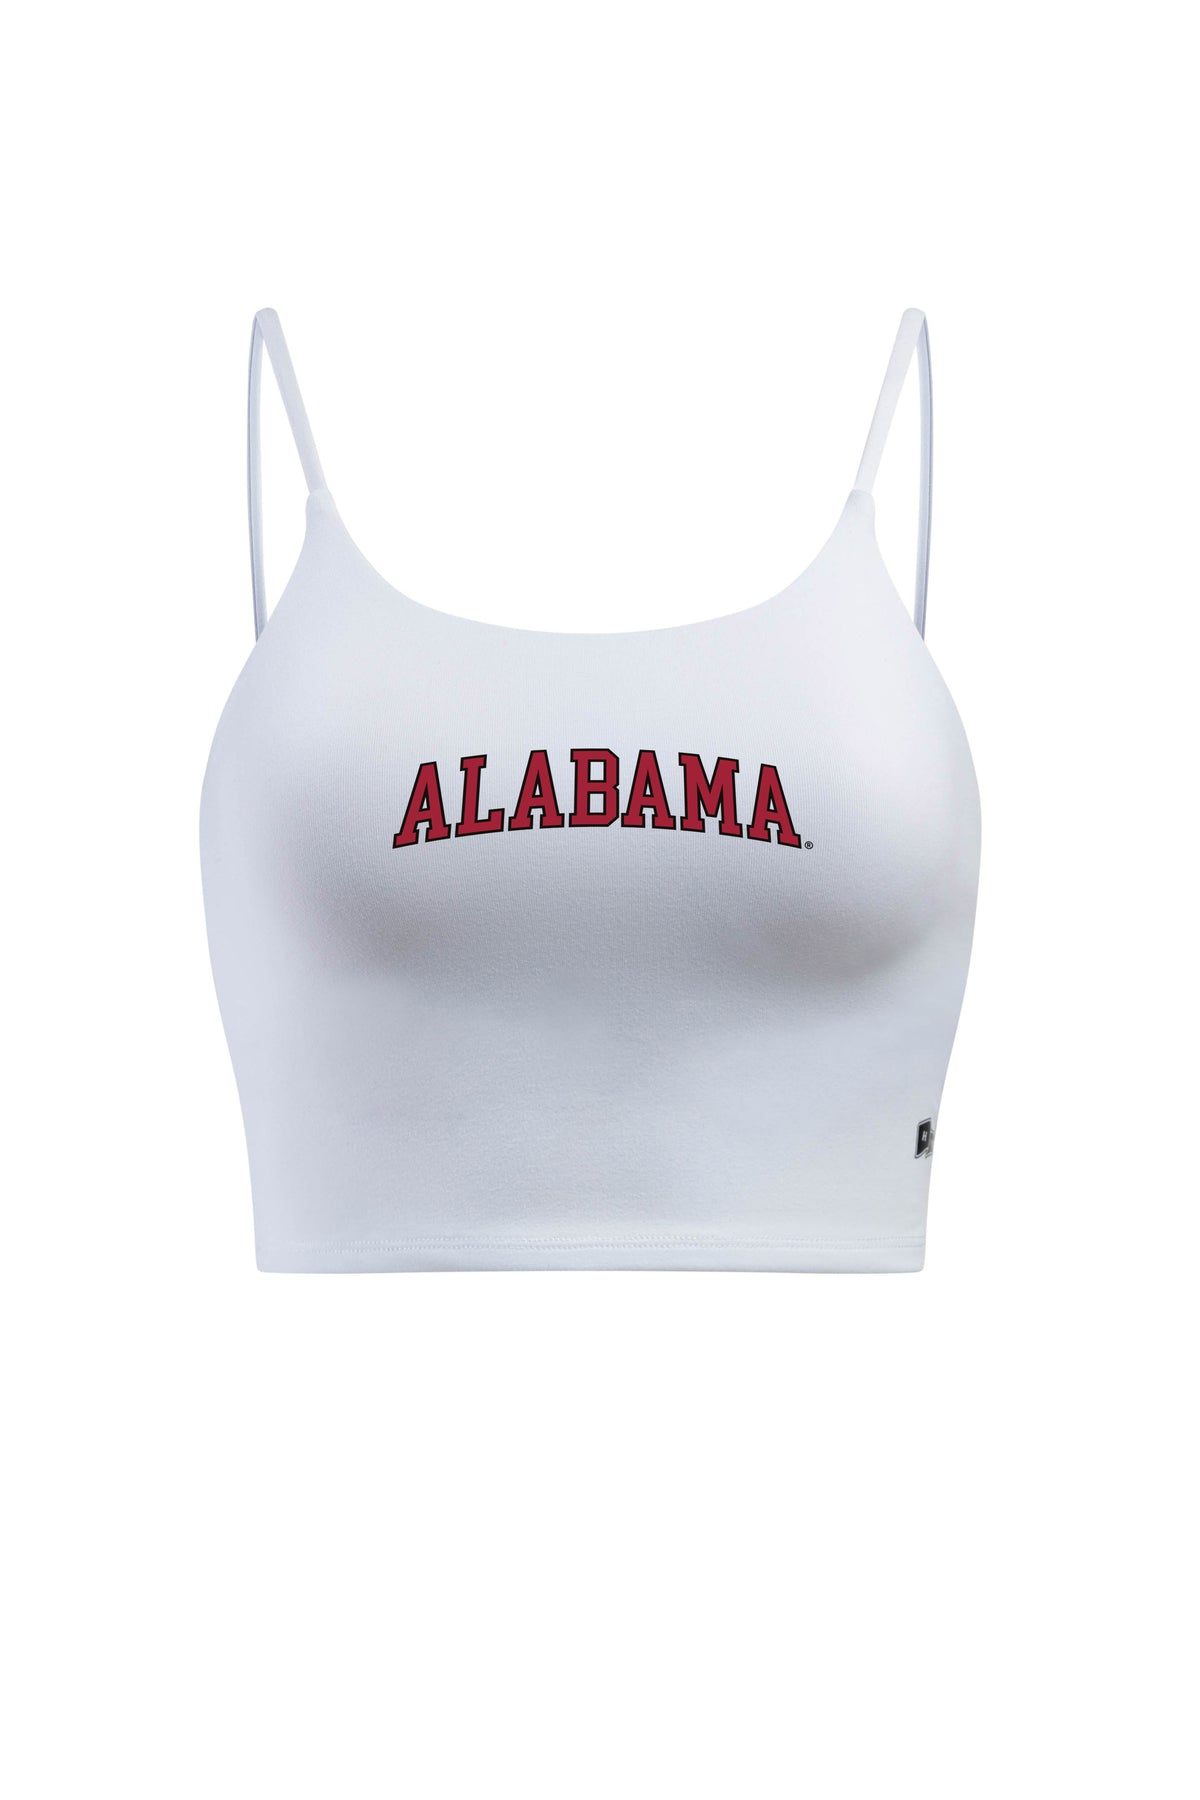 University of Alabama Bra Tank Top